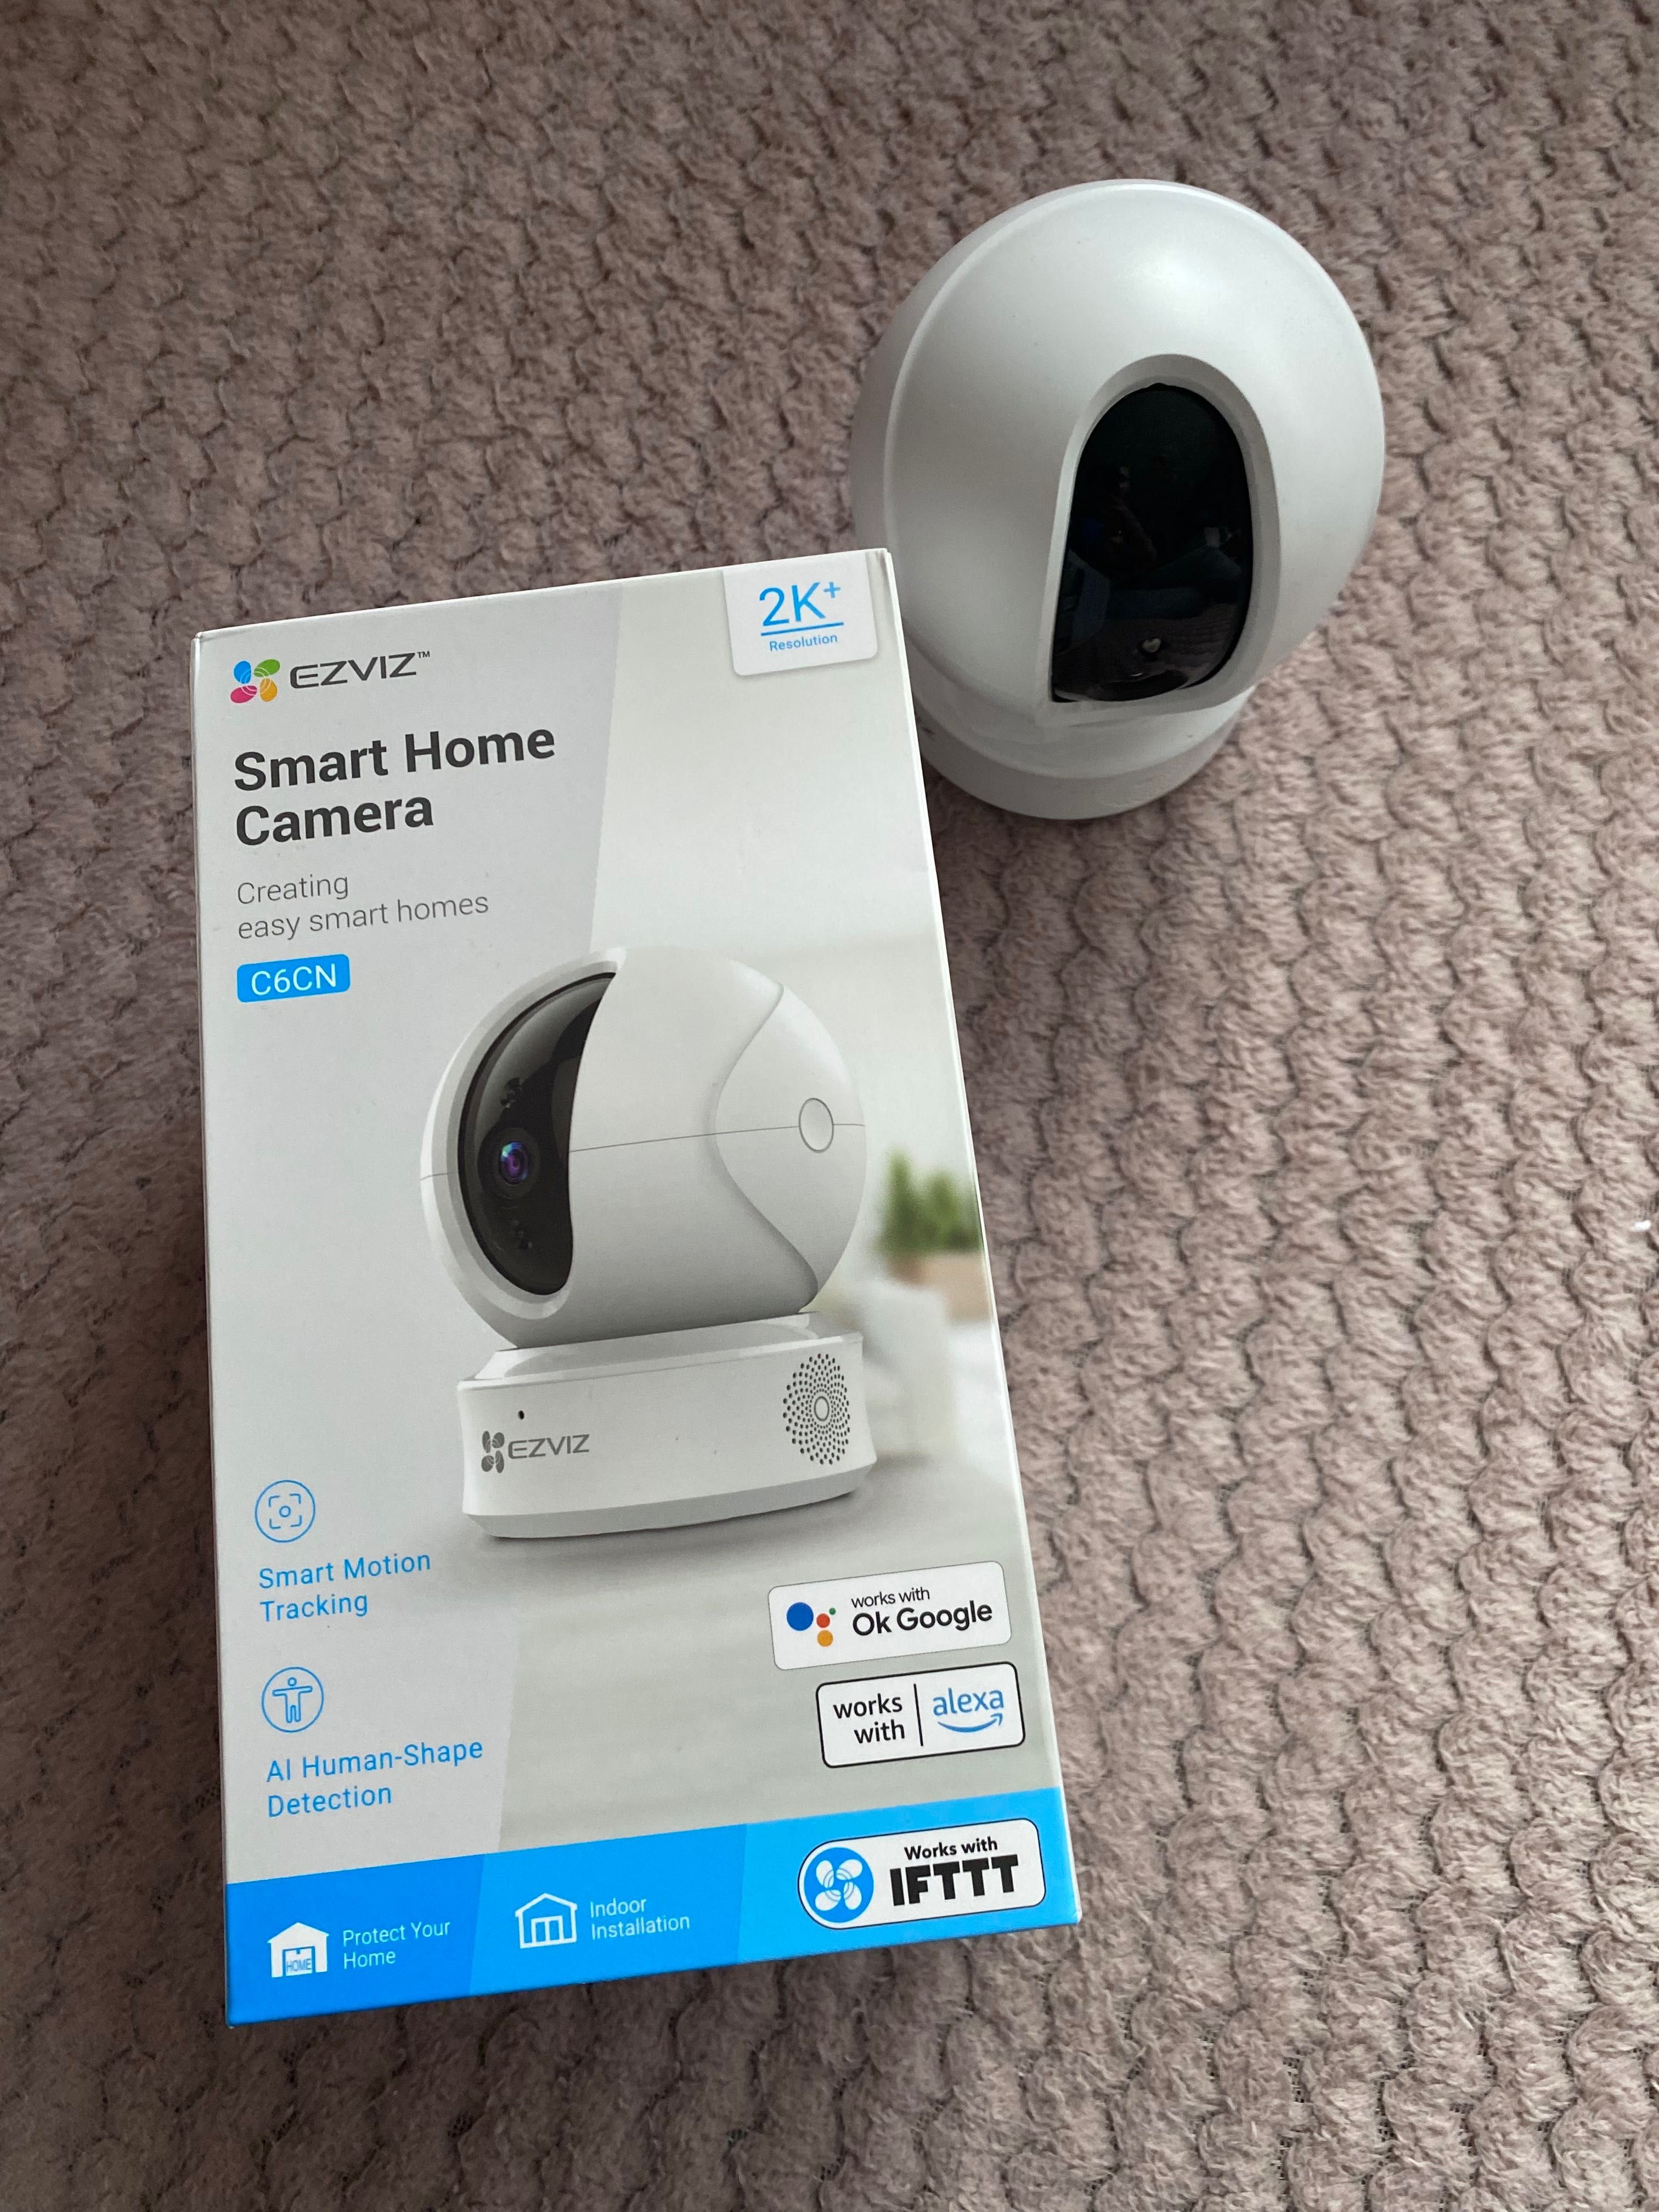 Inteligentna kamera do monitoringu do domu jak nowa EZVIZ c6cn